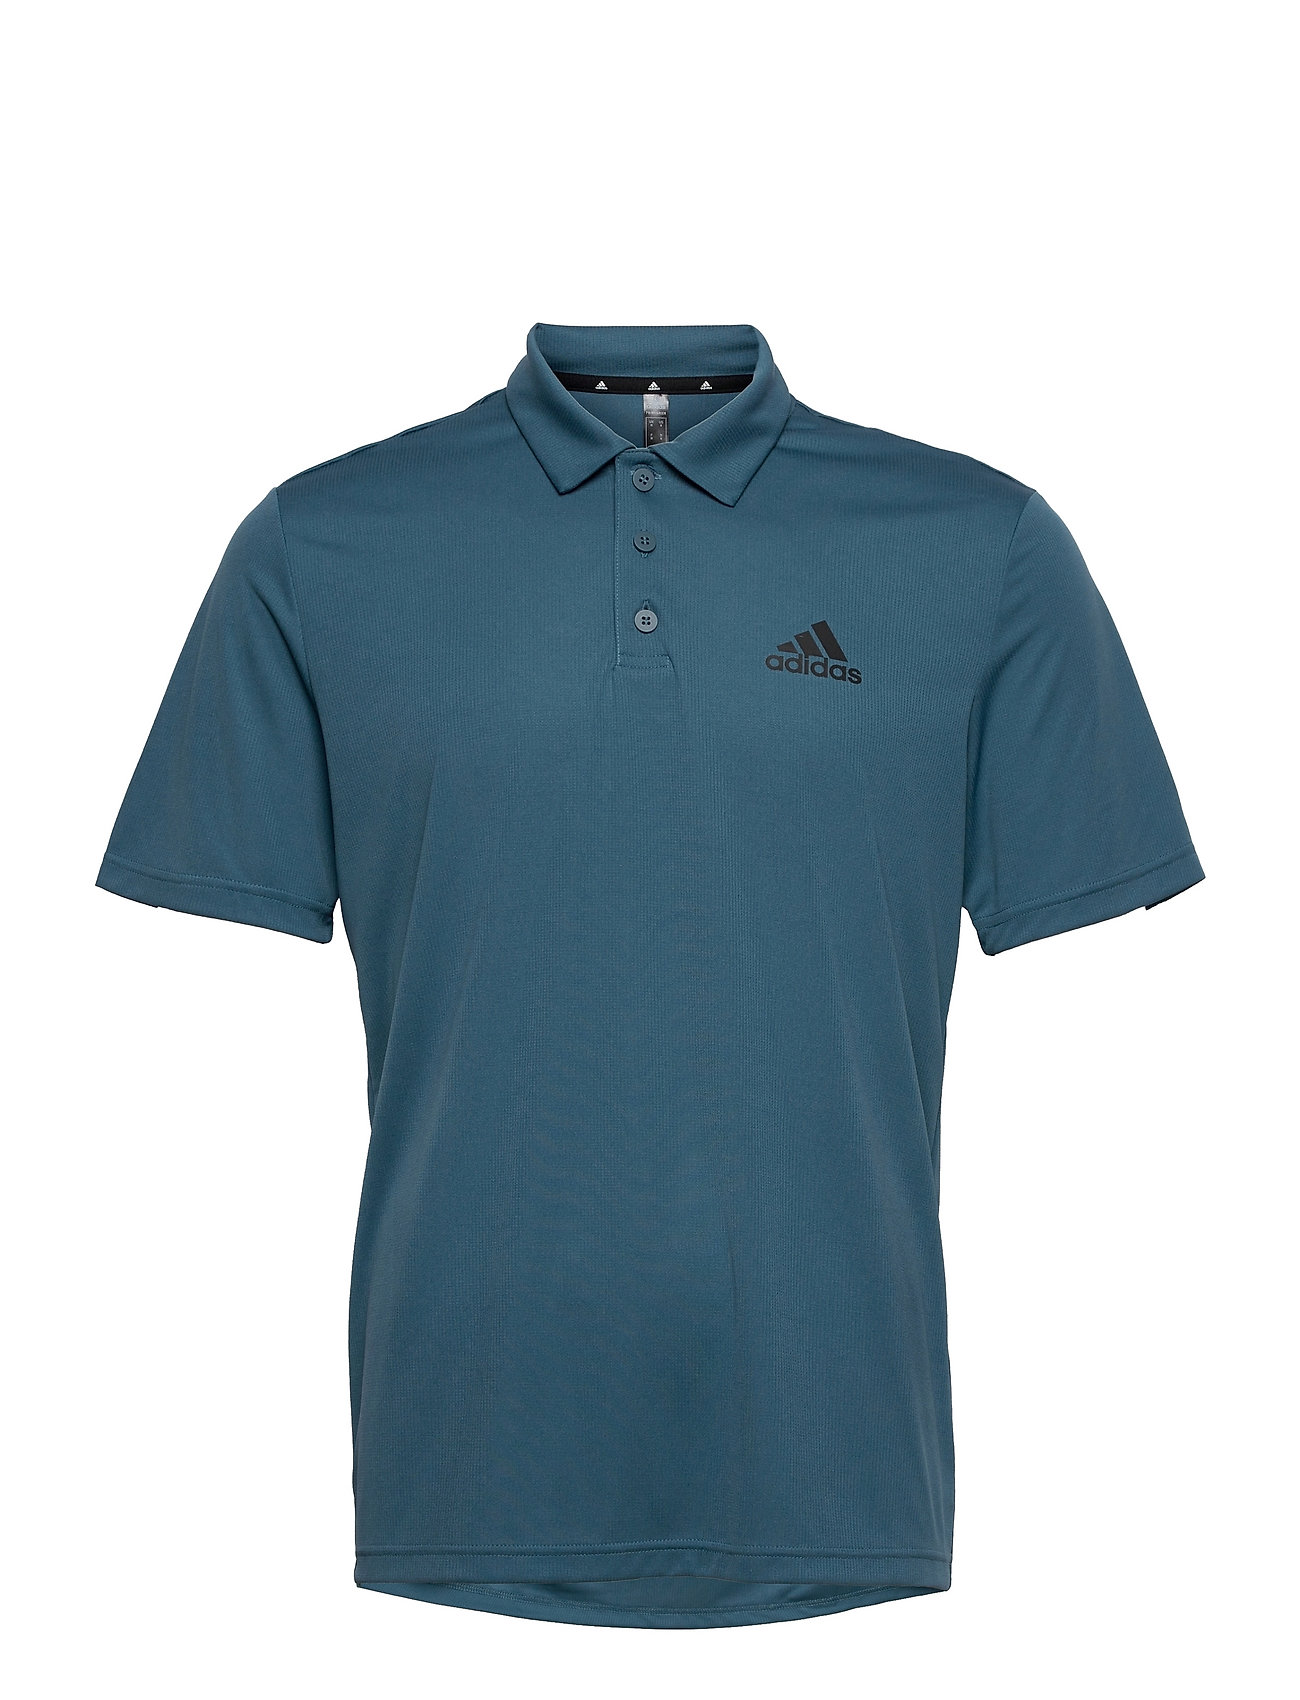 Aeroready Designed To Move Polo Shirt Polos Short-sleeved Sininen Adidas Performance, adidas Performance